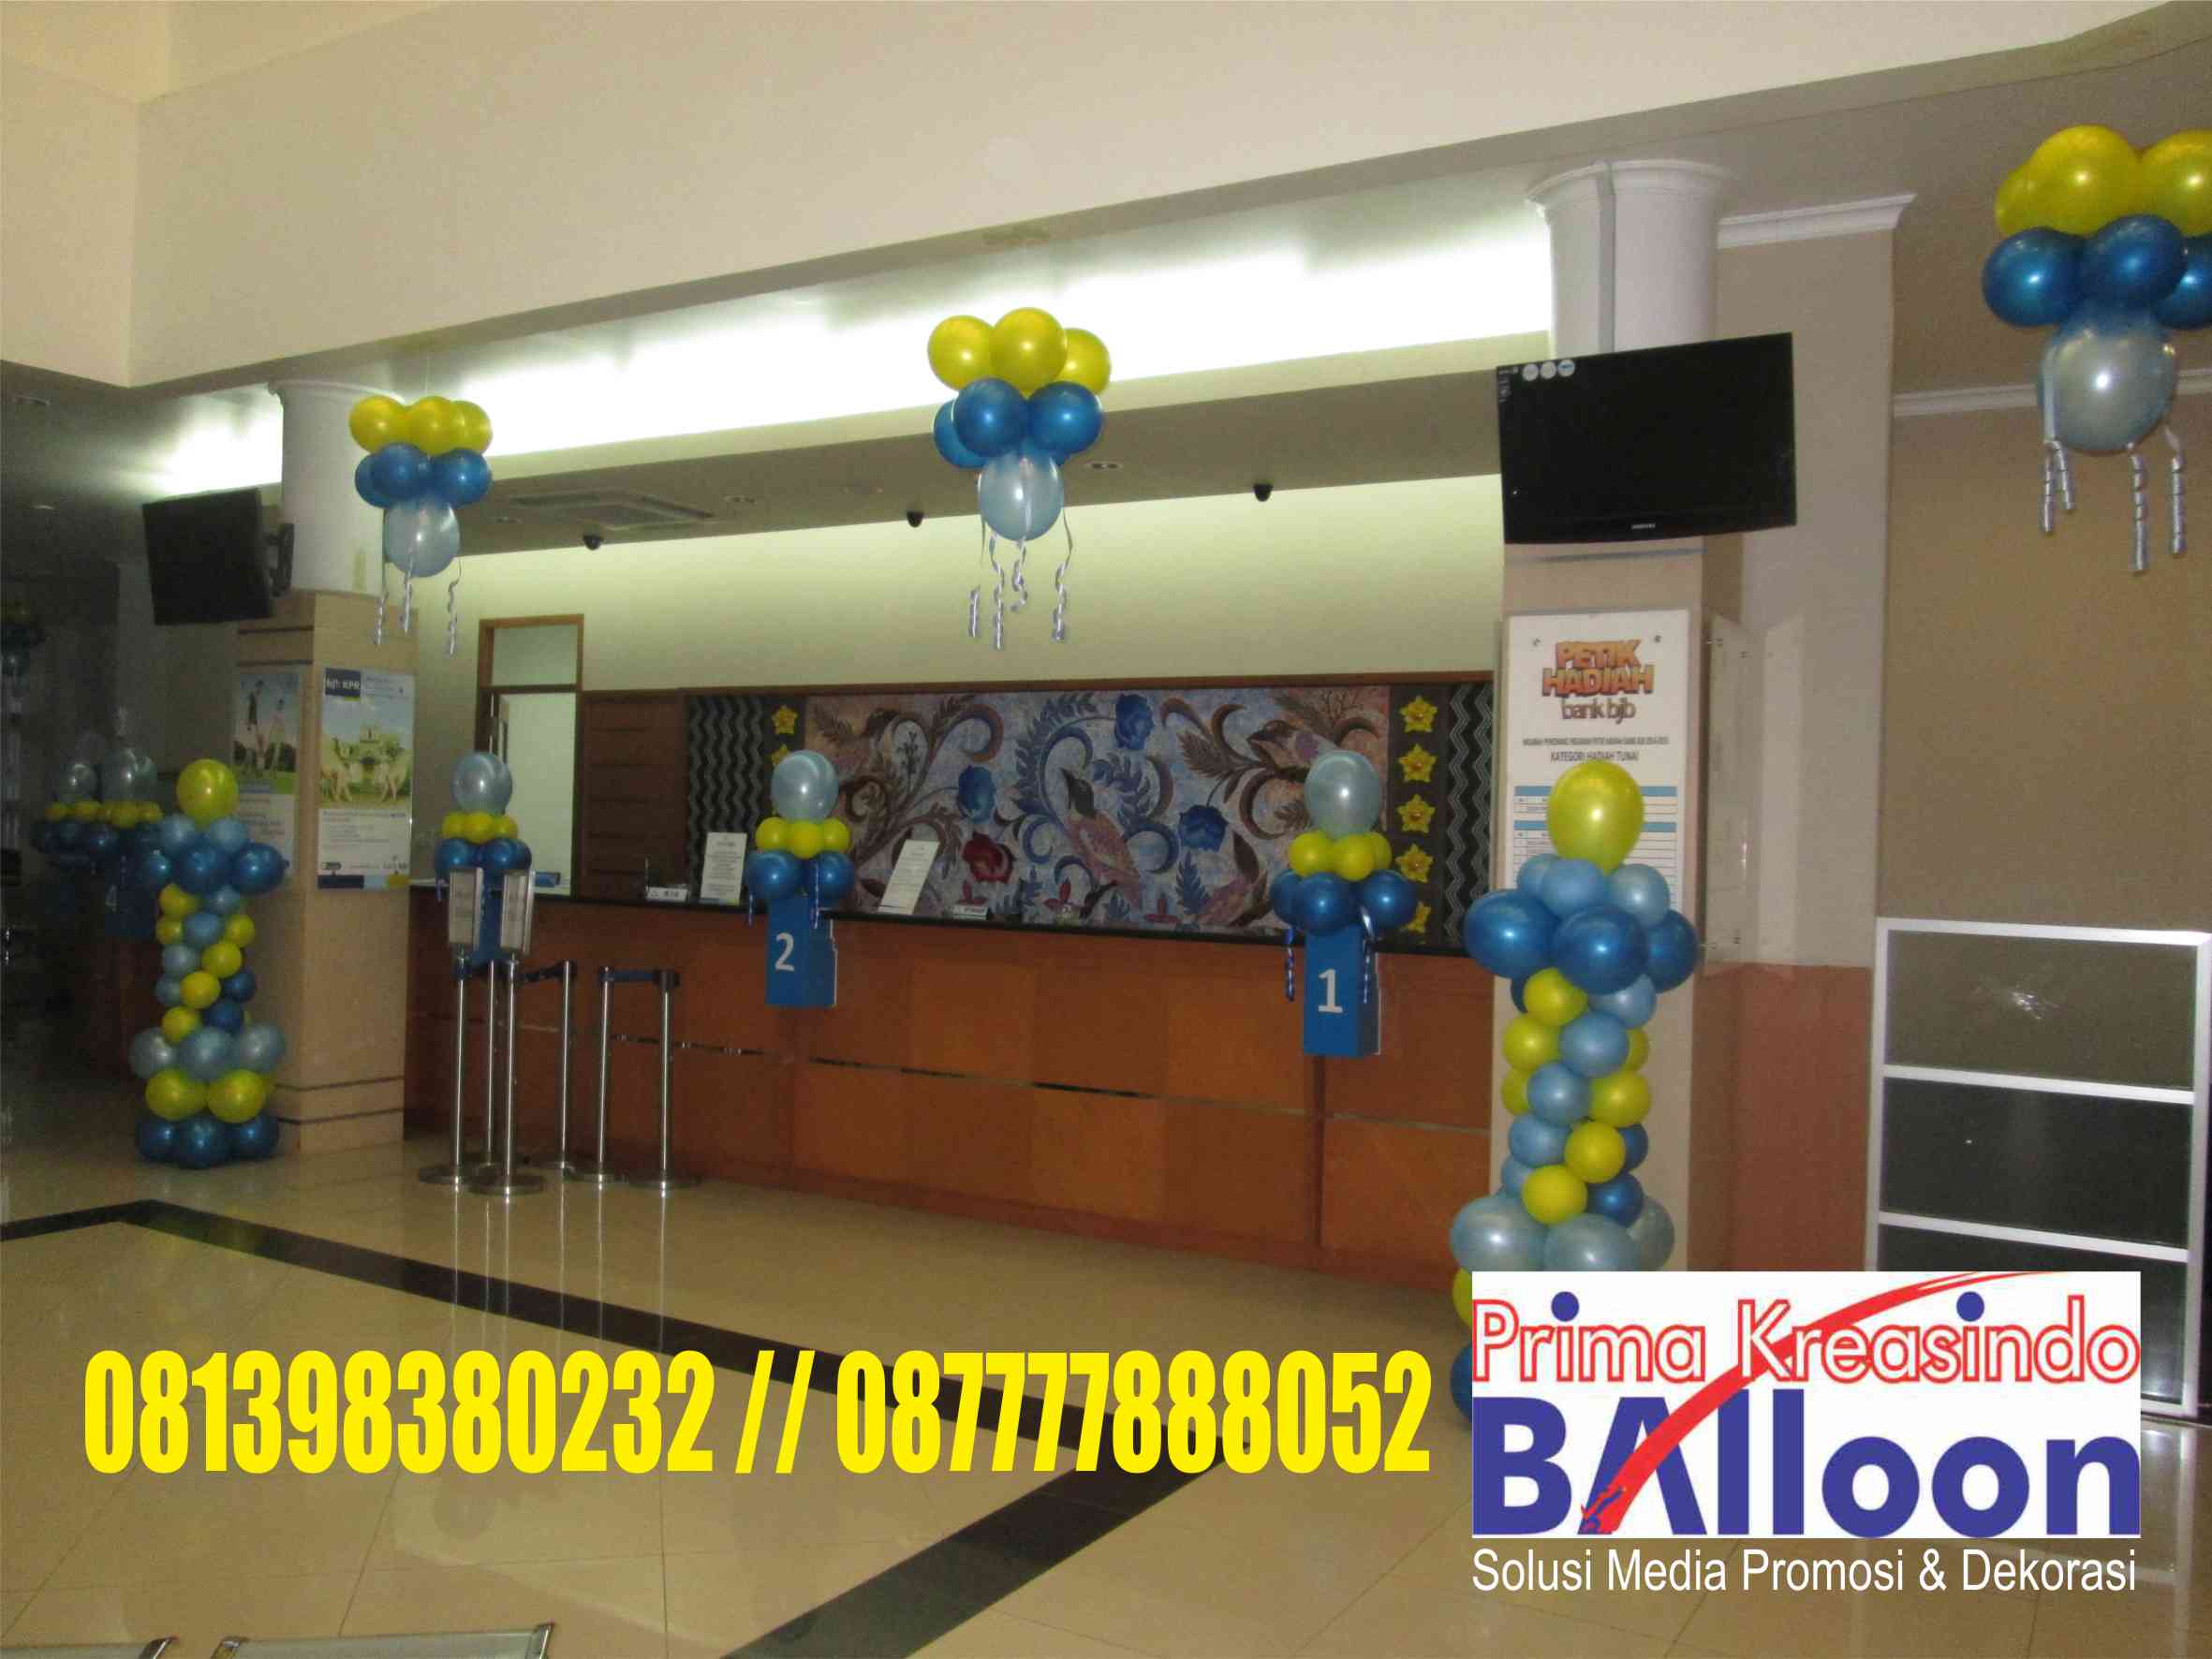  Dekorasi  balon ulang  tahun  bank BJB KE 54 TAHUN  